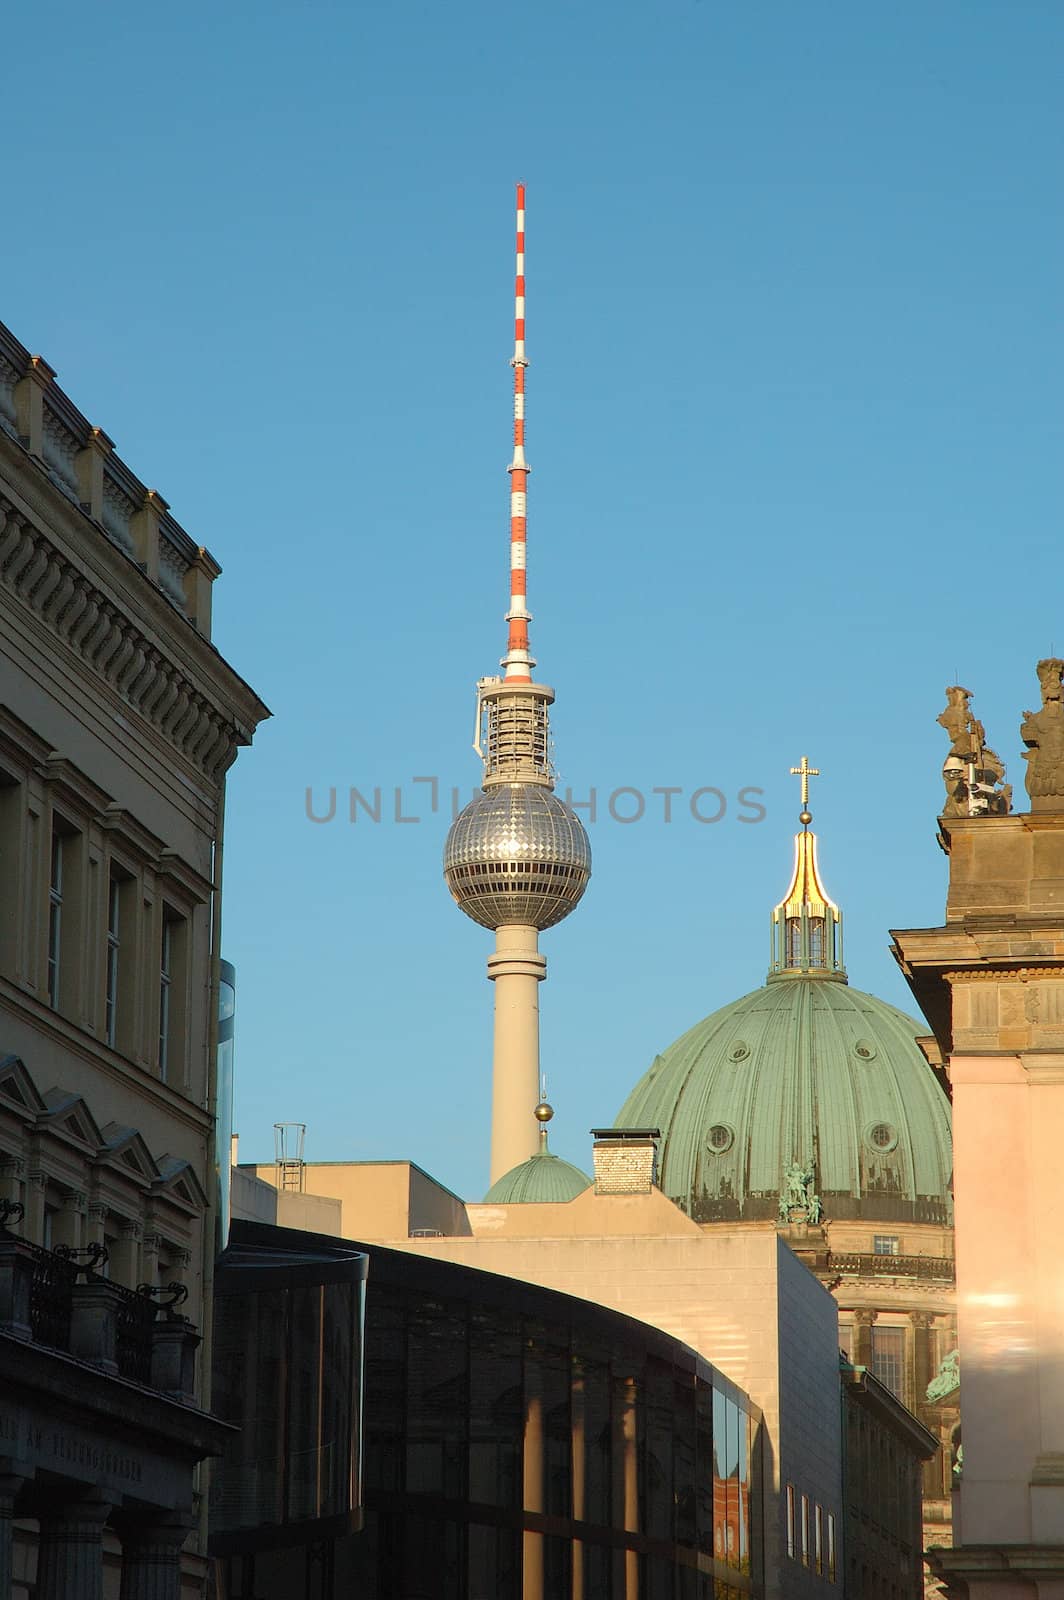 TV tower on Alexander Platz in Berlin Germany